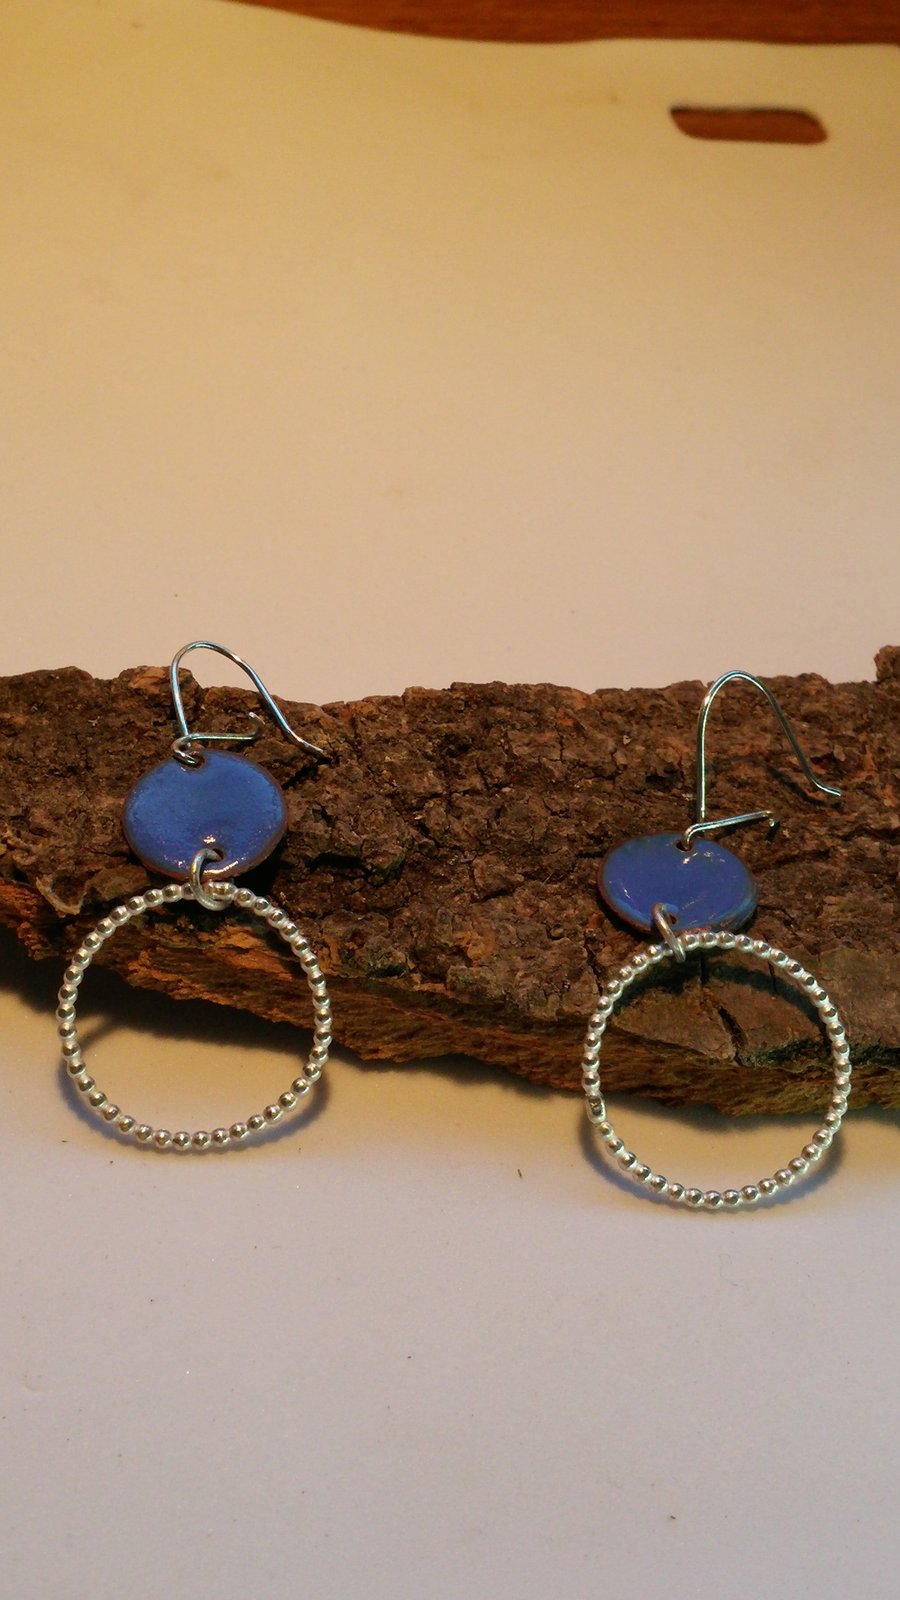 Enamel and silver earrings, silver bead wire hoops and blue vitreous enamel